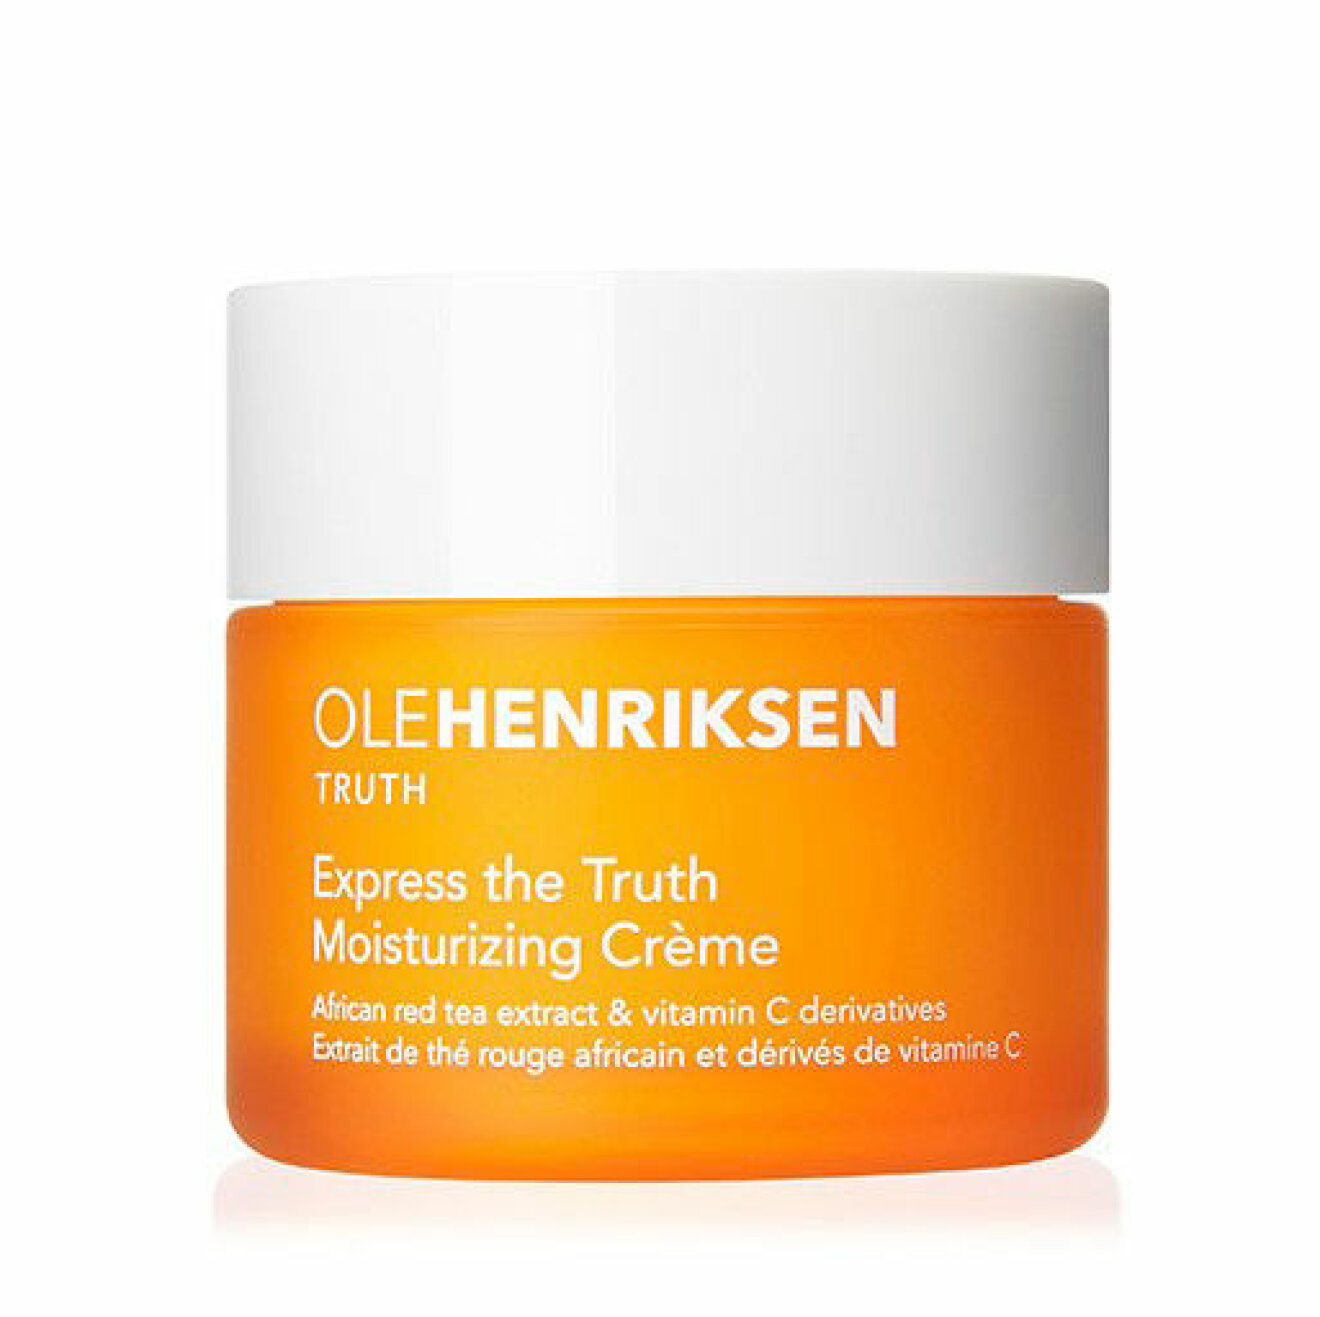 Express the truth moisturizing creme från Ole Henriksen